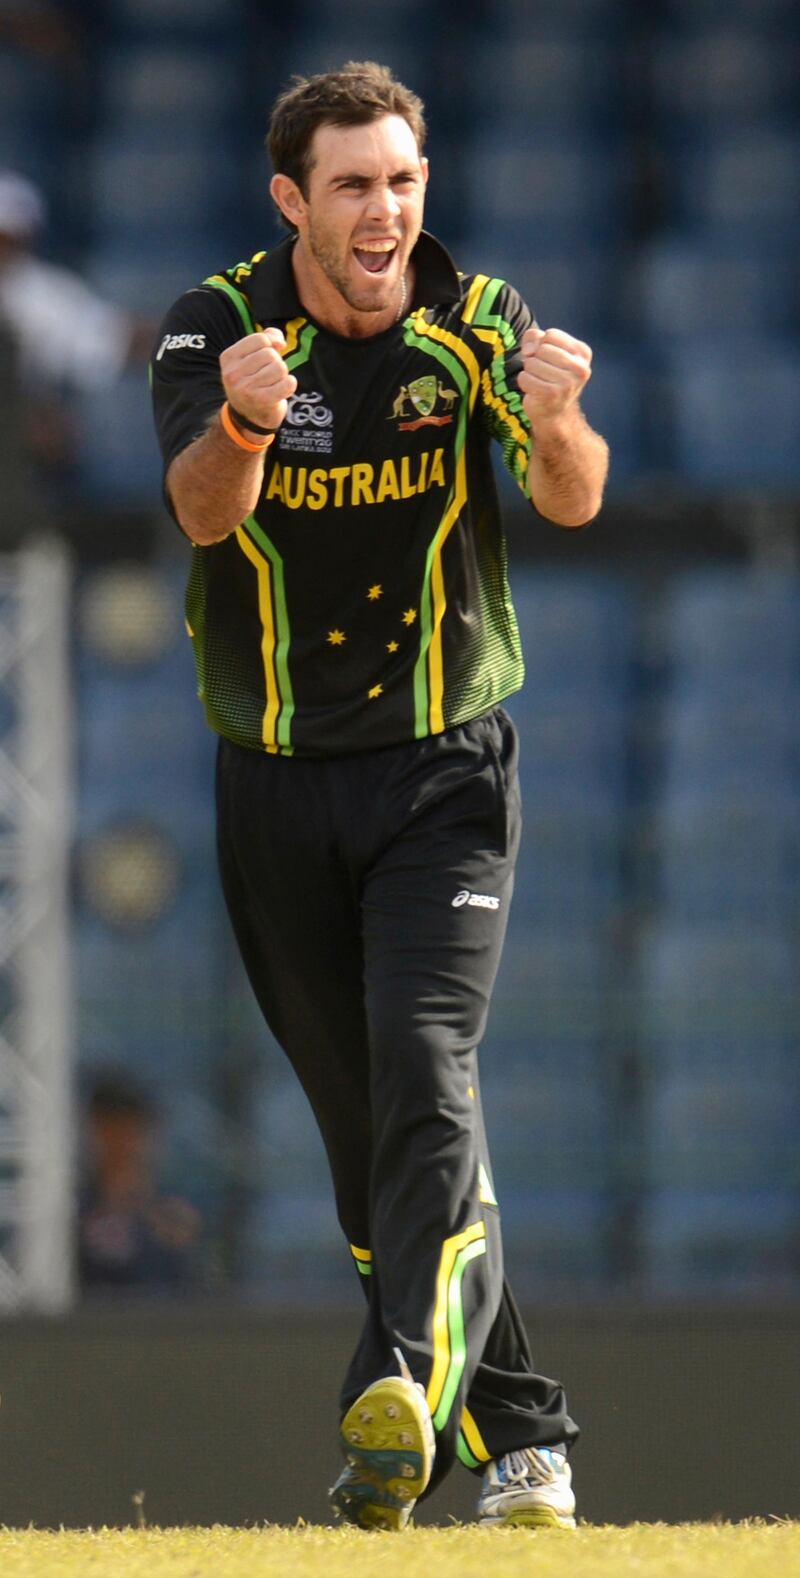 Australia's Glenn Maxwell celebrates dismissing Ireland's Ed Joyce during the ICC World Twenty20 group B match at the R. Premadasa Stadium, Colombo September 19, 2012.  REUTERS/Philip Brown (SRI LANKA - Tags: SPORT CRICKET) - RTR3854X